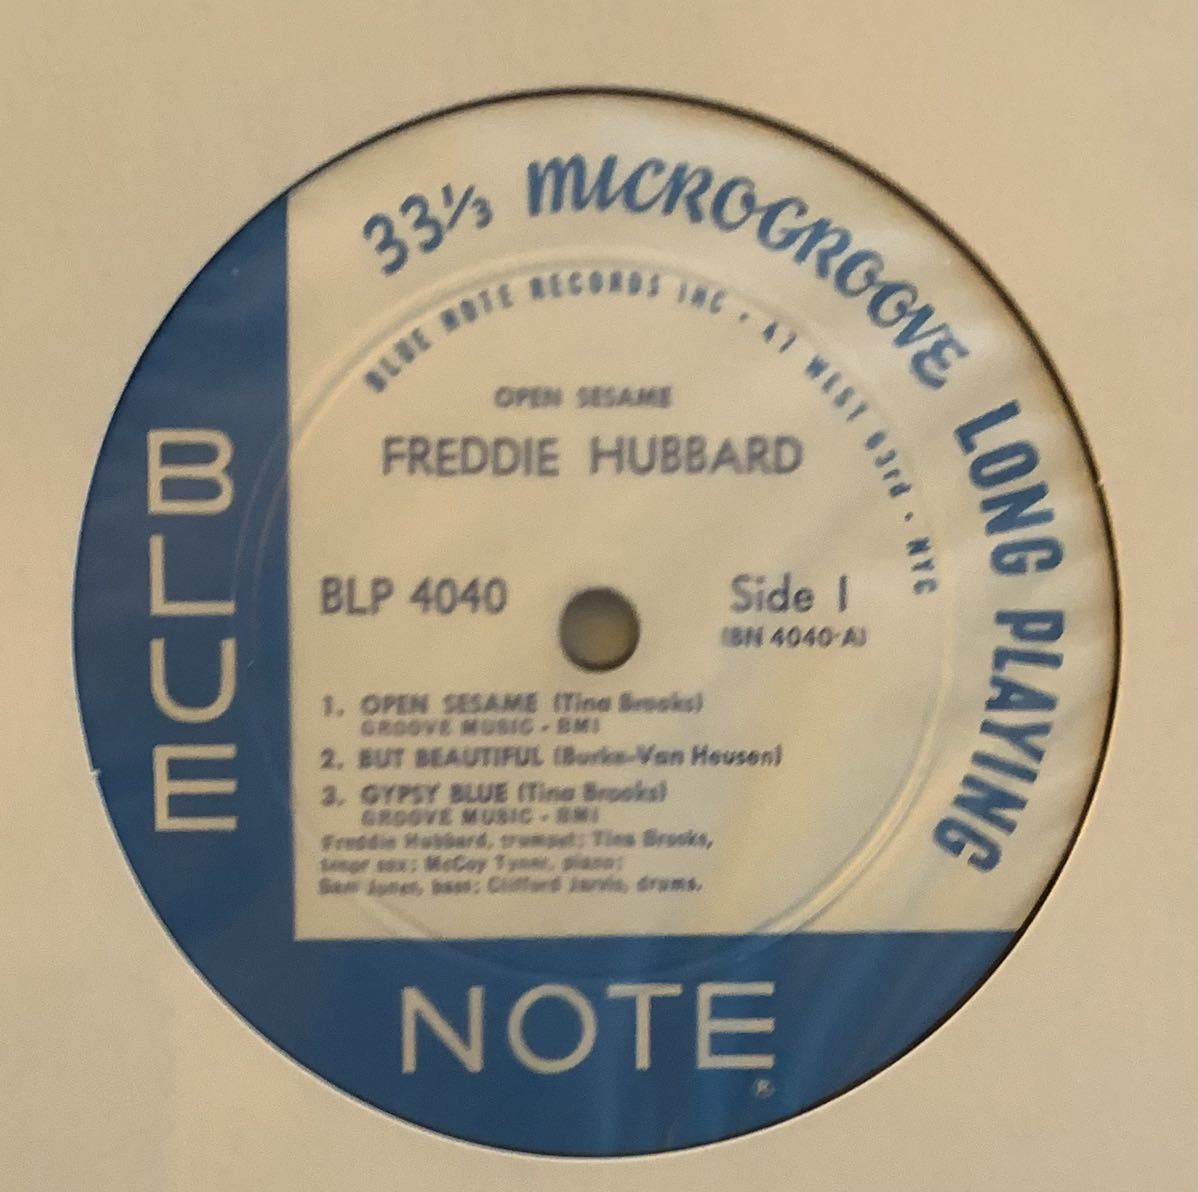 FREDDIE HUBBARD TINA BROOKS OPEN SESAME BLP4232 BLUE NOTE ブルーノート プレミアム復刻 廃盤 高音質盤 重量盤 未開封！！_画像3